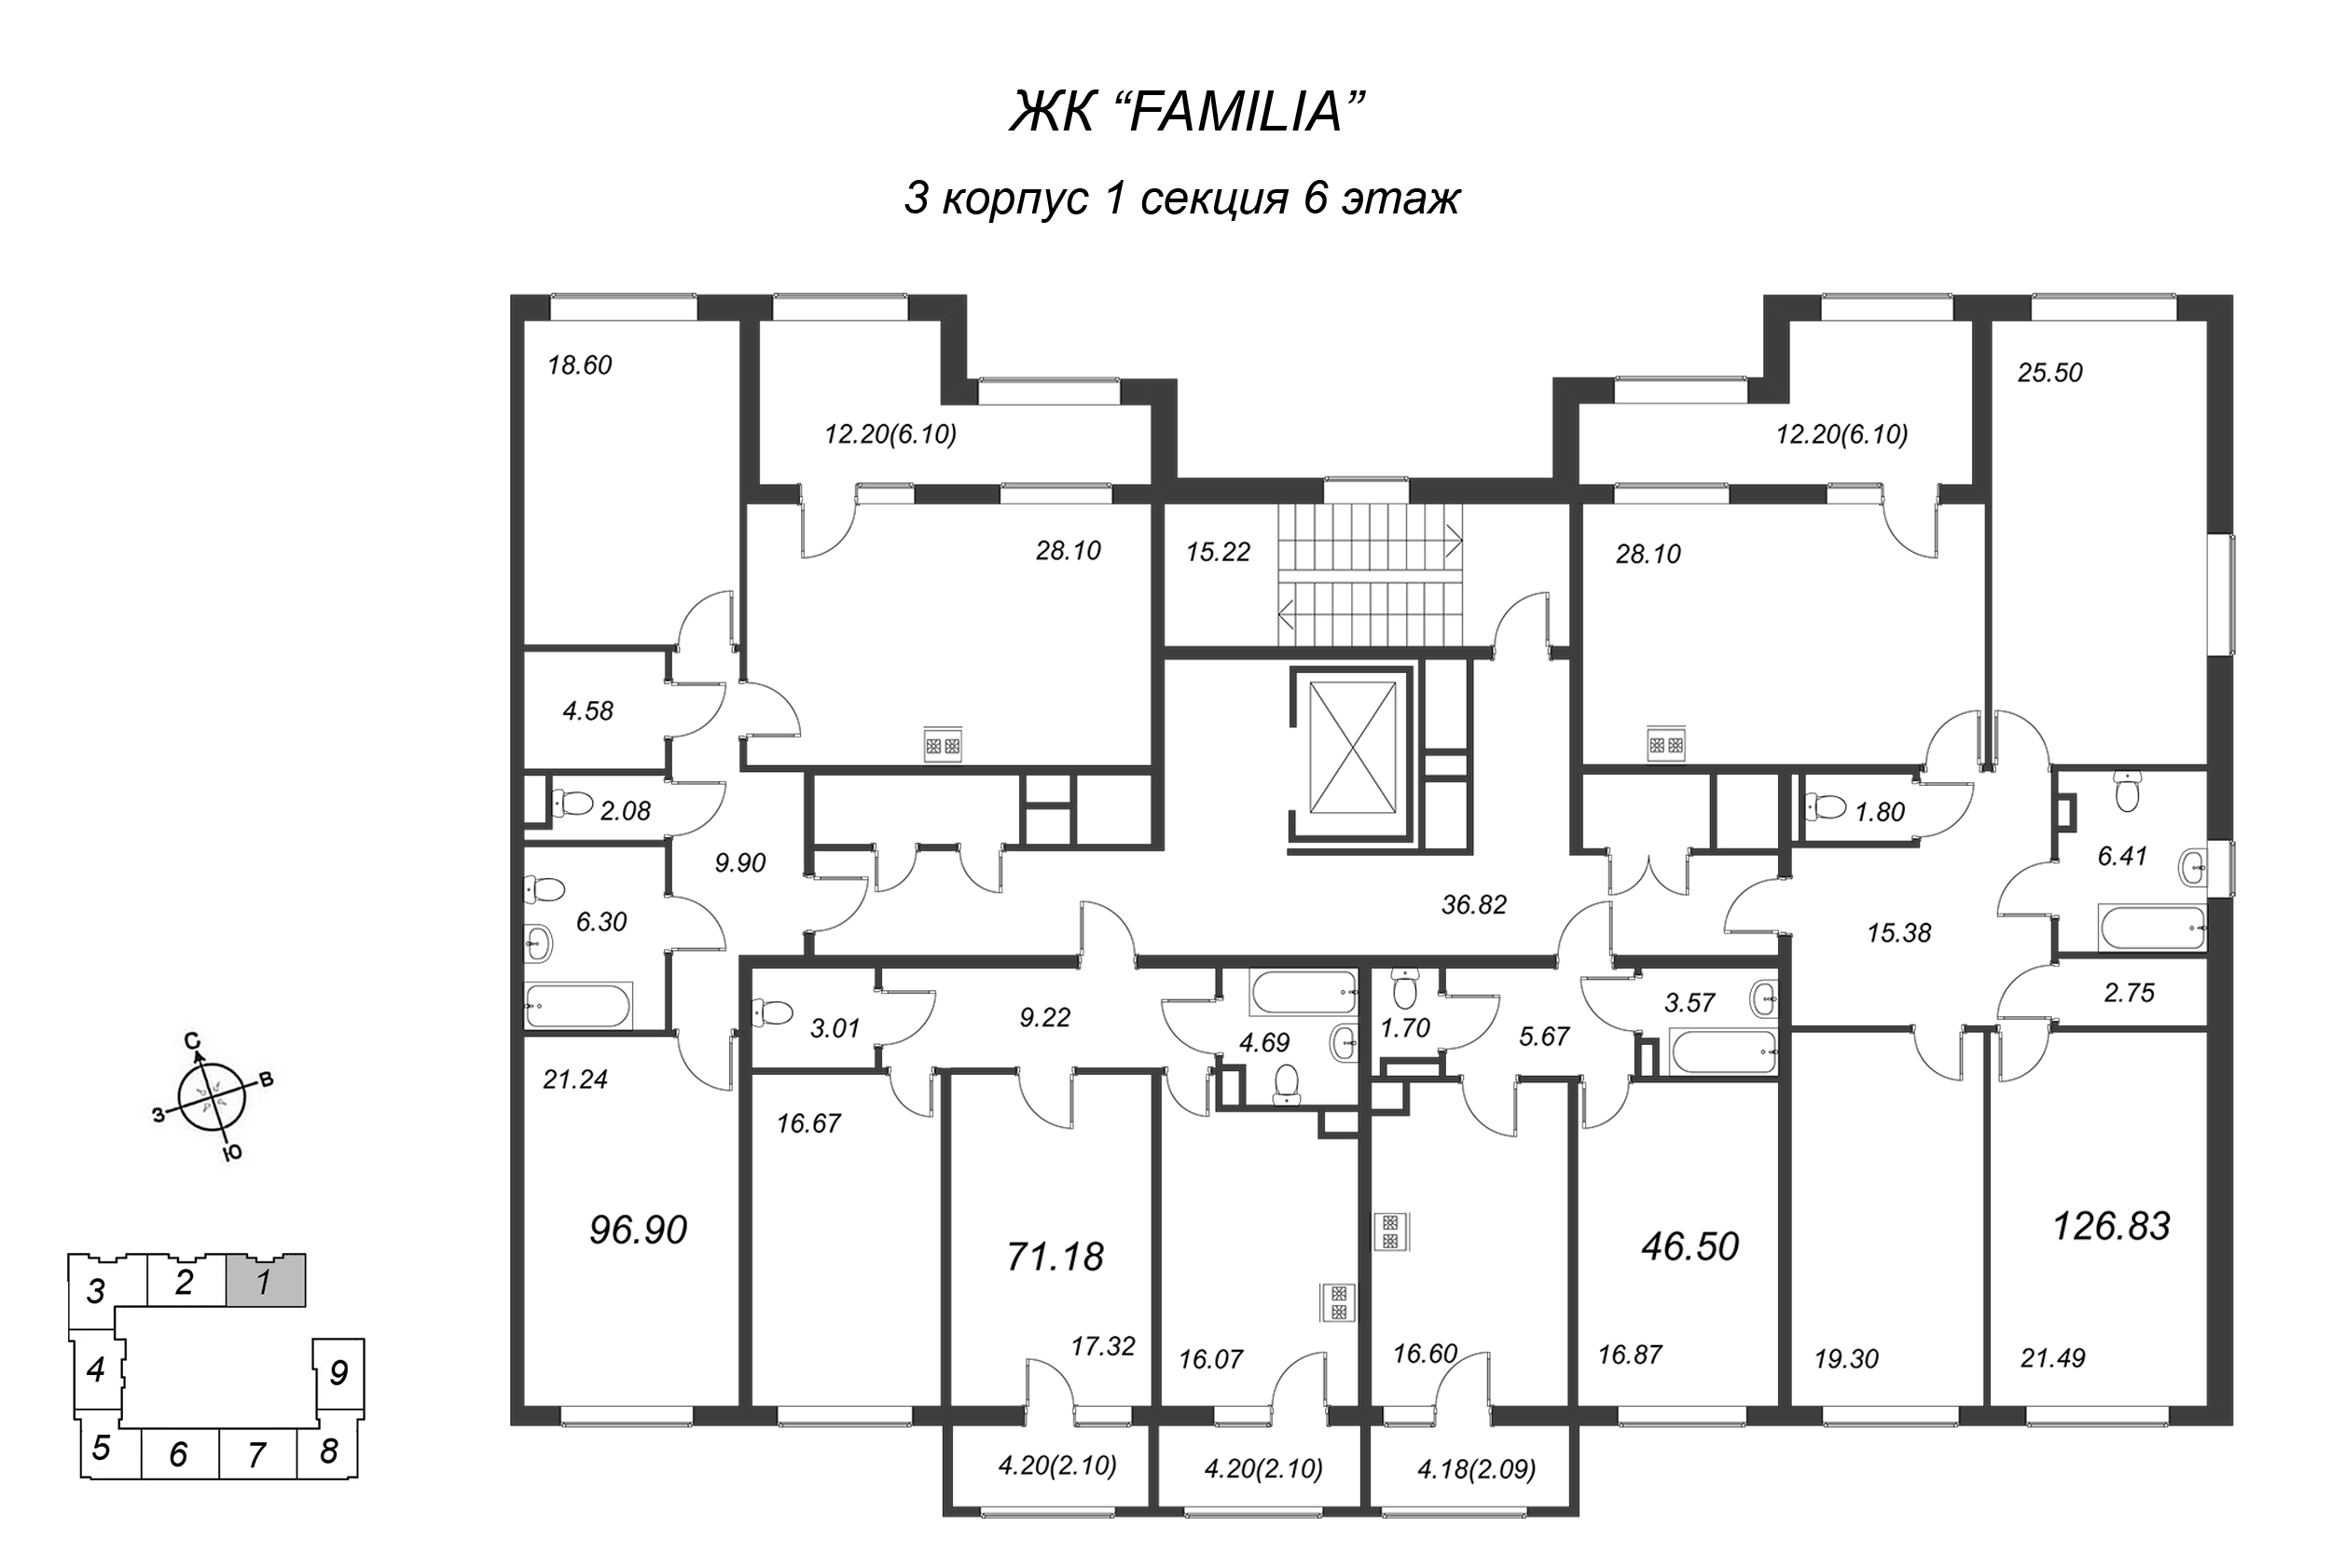 2-комнатная (Евро) квартира, 46.4 м² в ЖК "FAMILIA" - планировка этажа